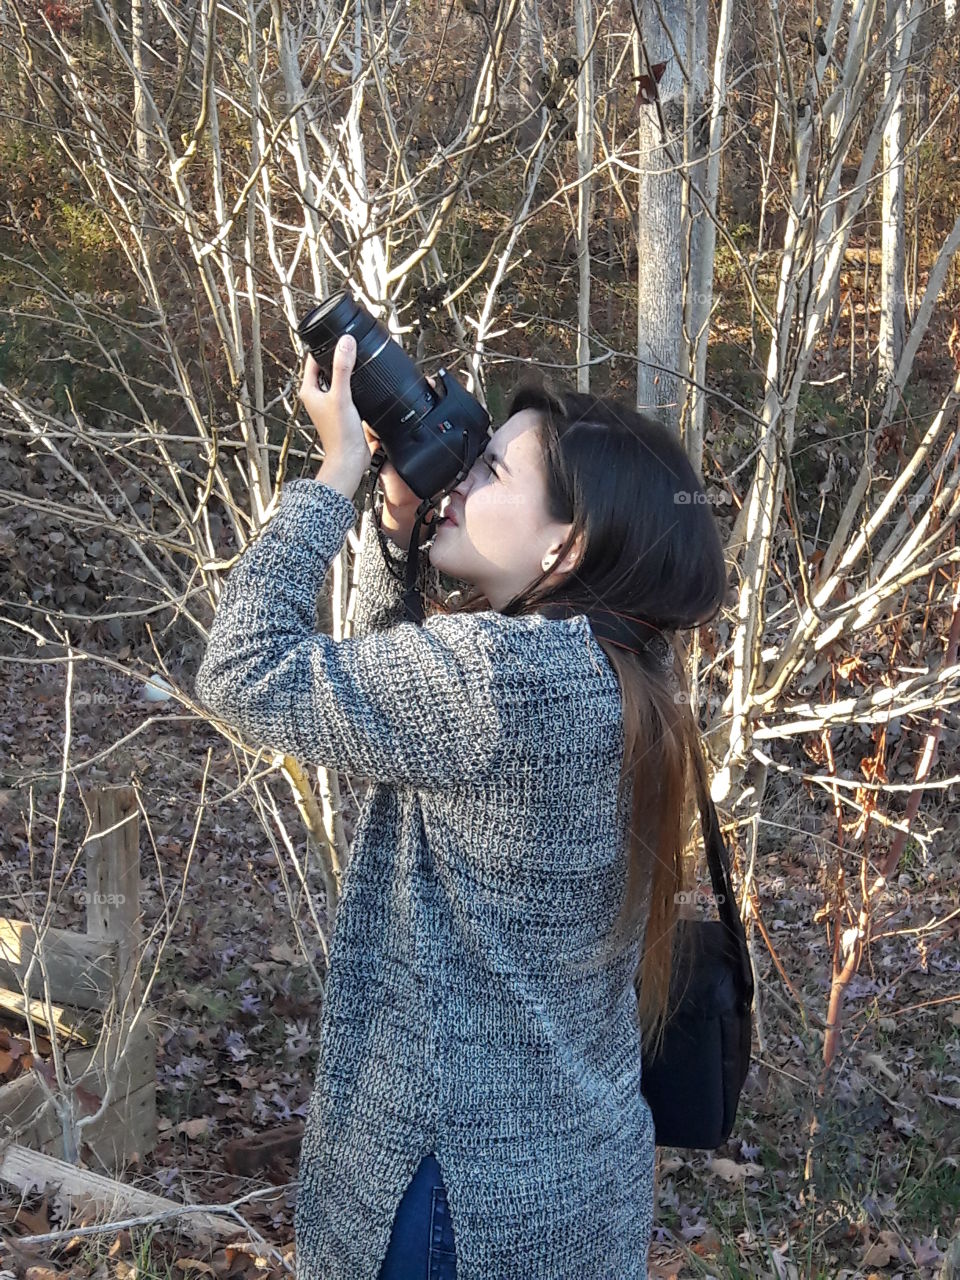 Female photographer clicking photograph